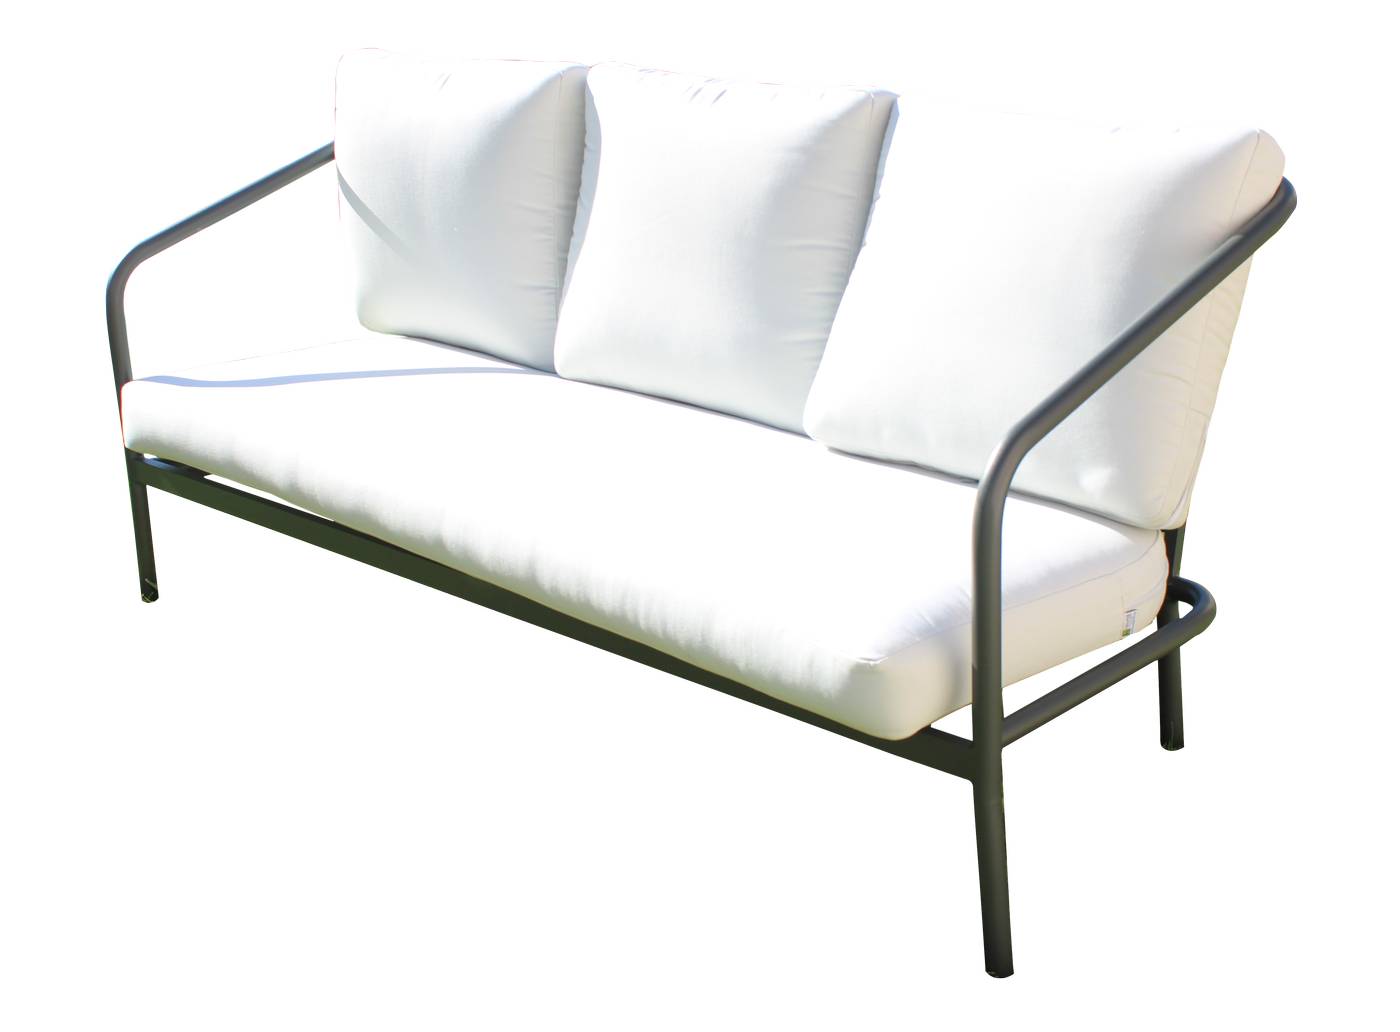 Set Aluminio Alexis-8 - Conjunto: 1 sofá 3 plazas + 2 sillones + 1 mesa de centro. Estructura aluminio color blanco, antracita, champagne, plata o marrón.